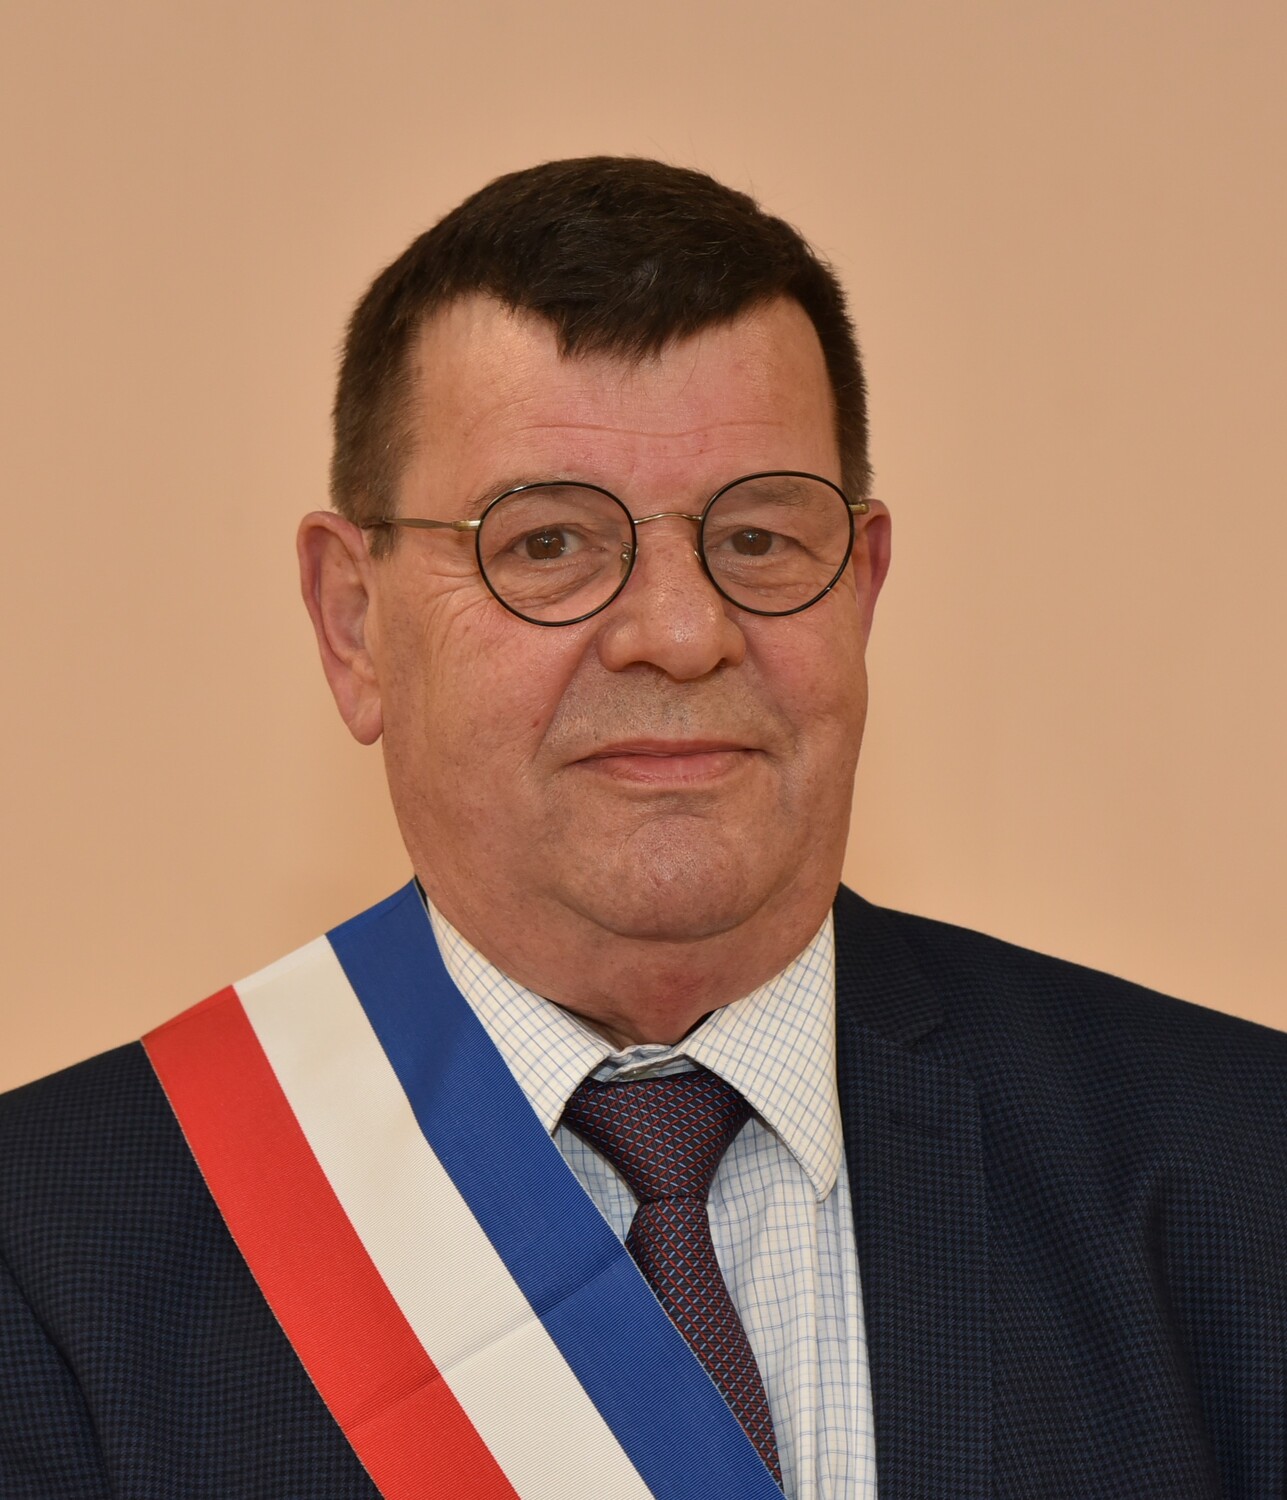 Michel THOMAS